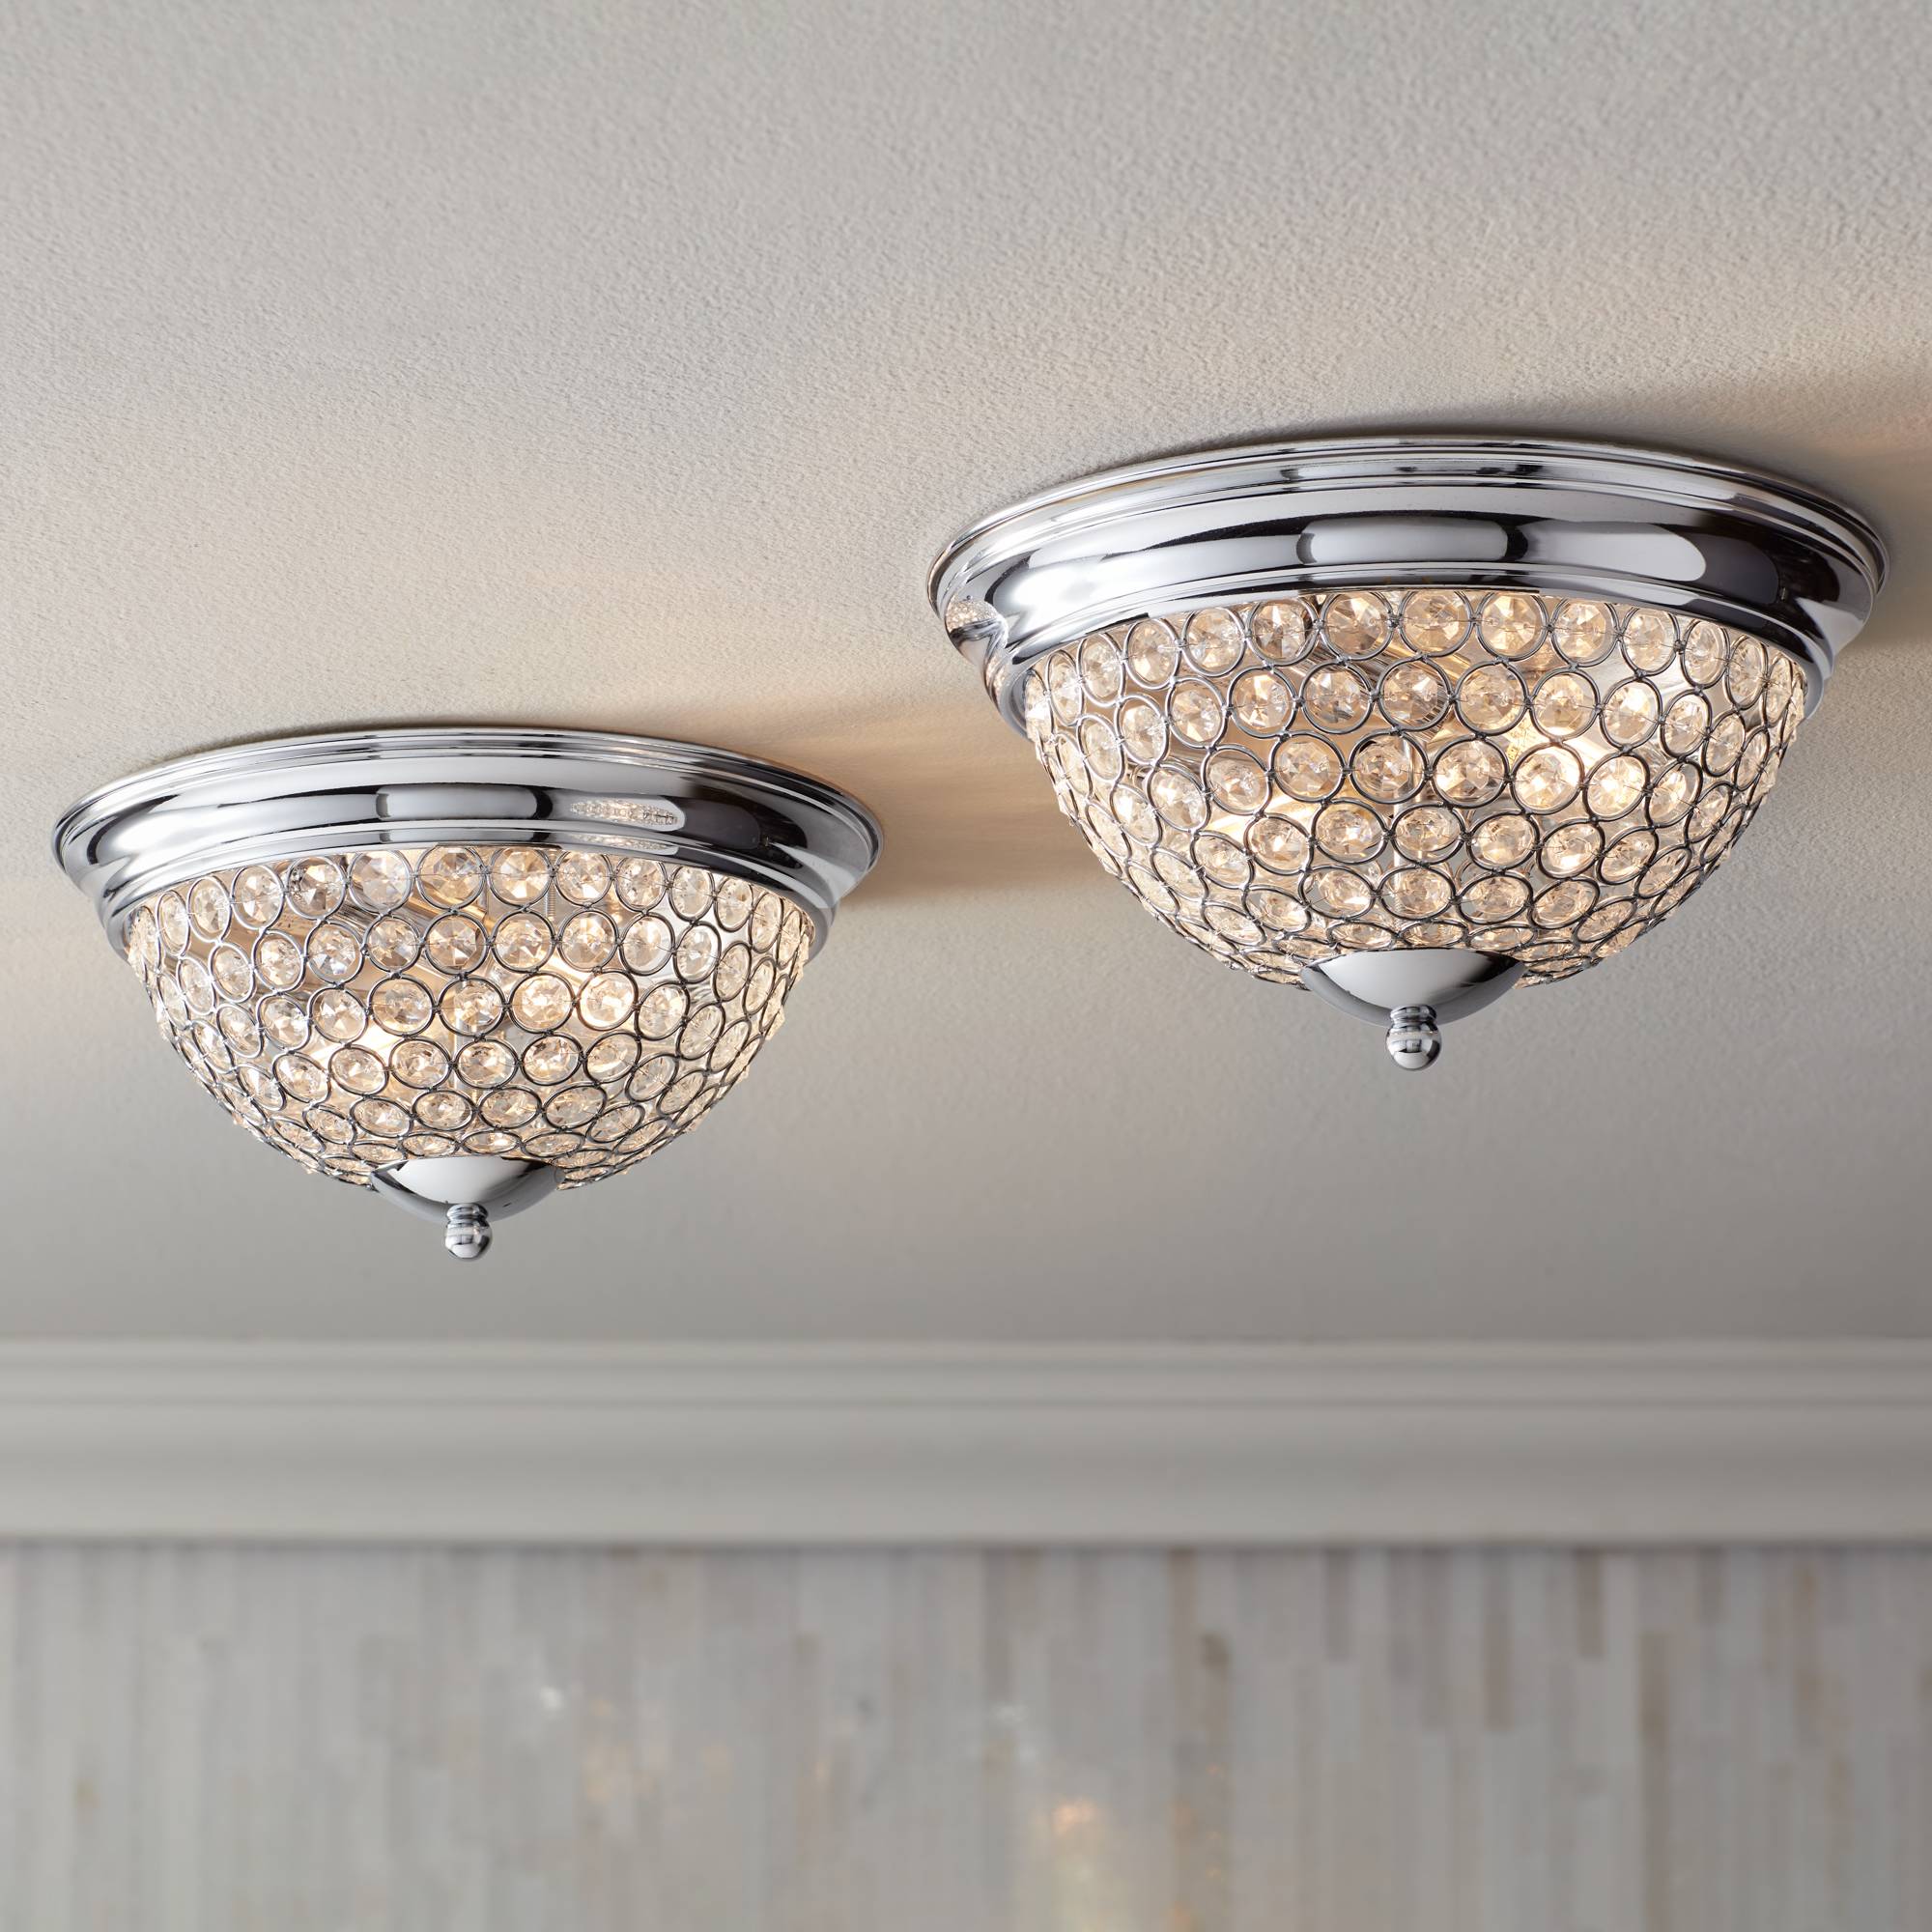 Details About Ceiling Light Flush Mount Fixture Set Of 2 Silver Crystal 11 Hallway Bedroom